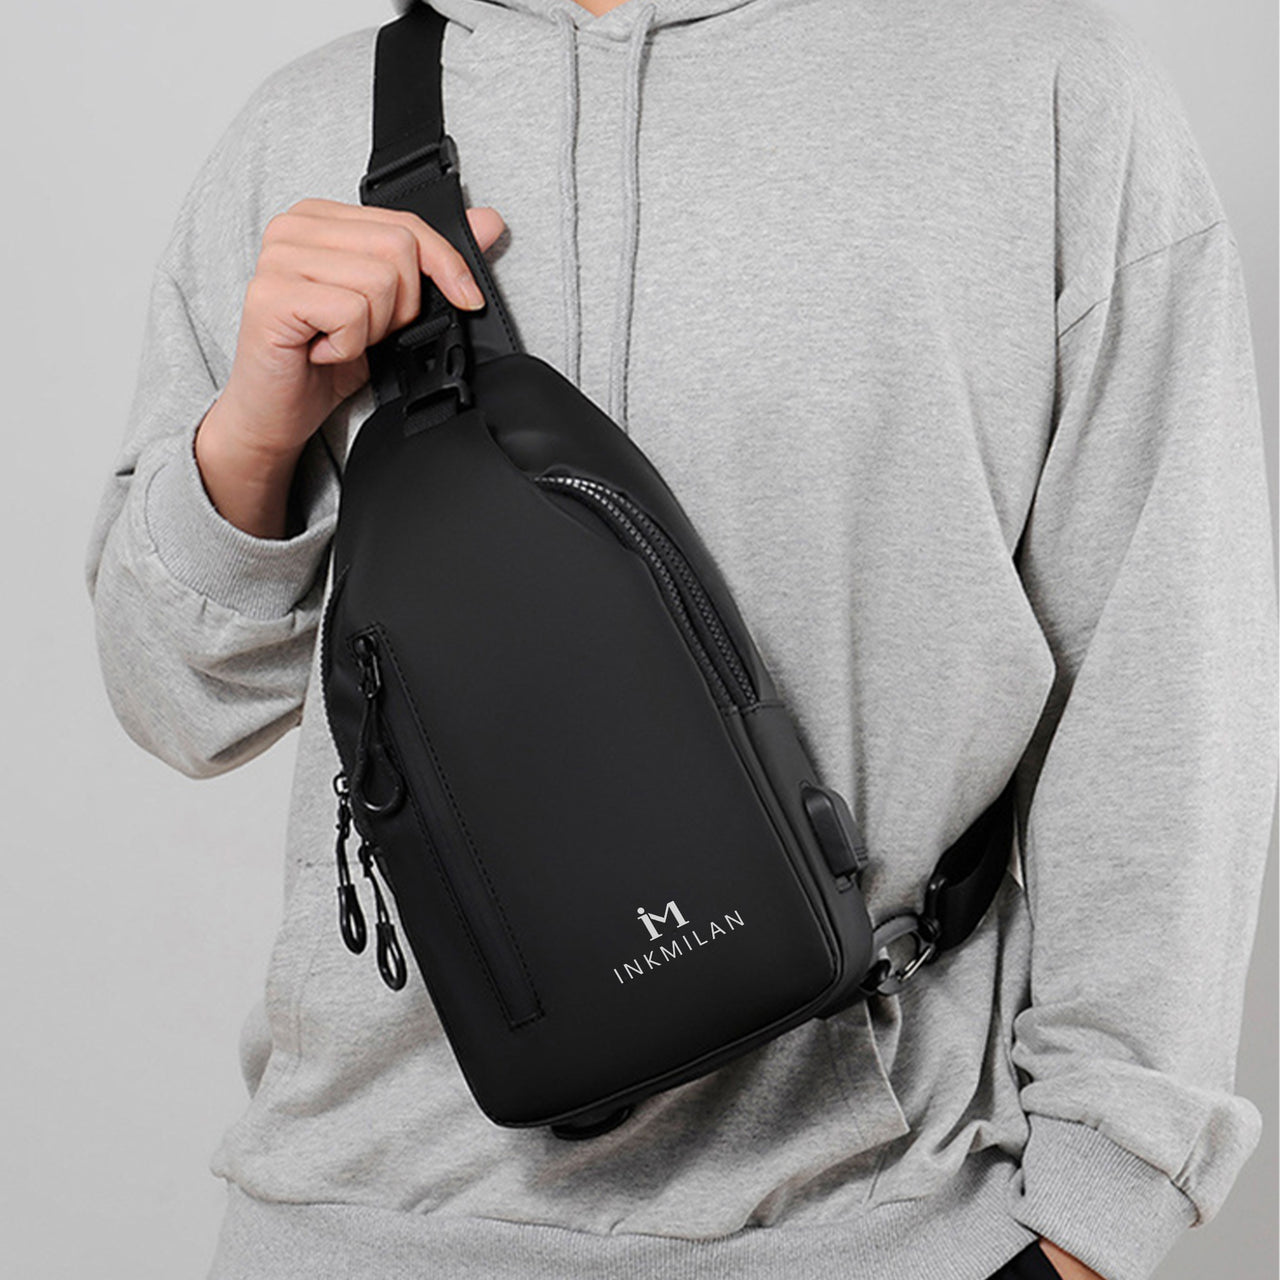 INKMILAN Multifunction Anti-Theft Sacgear Backpack Sling Bag